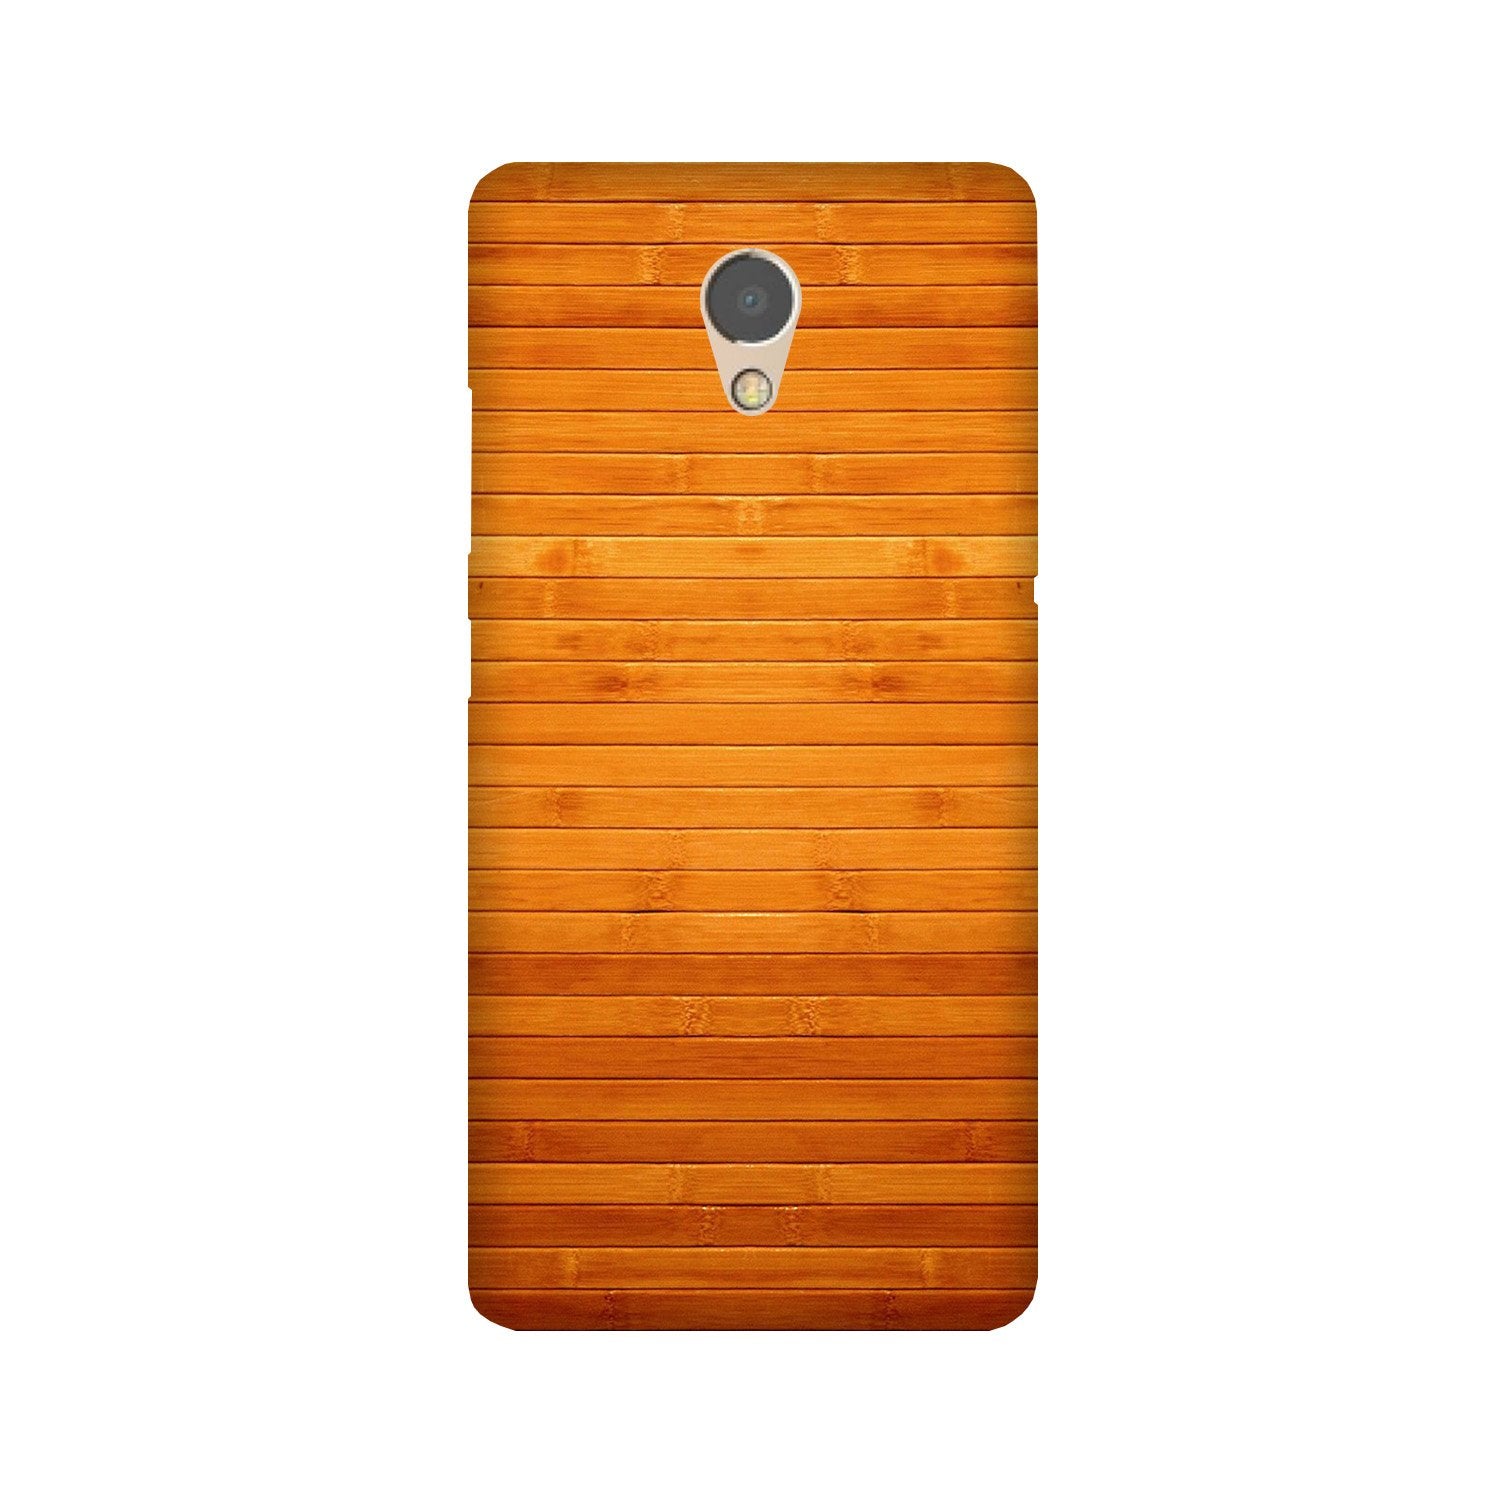 Wooden Look Case for Lenovo P2(Design - 111)